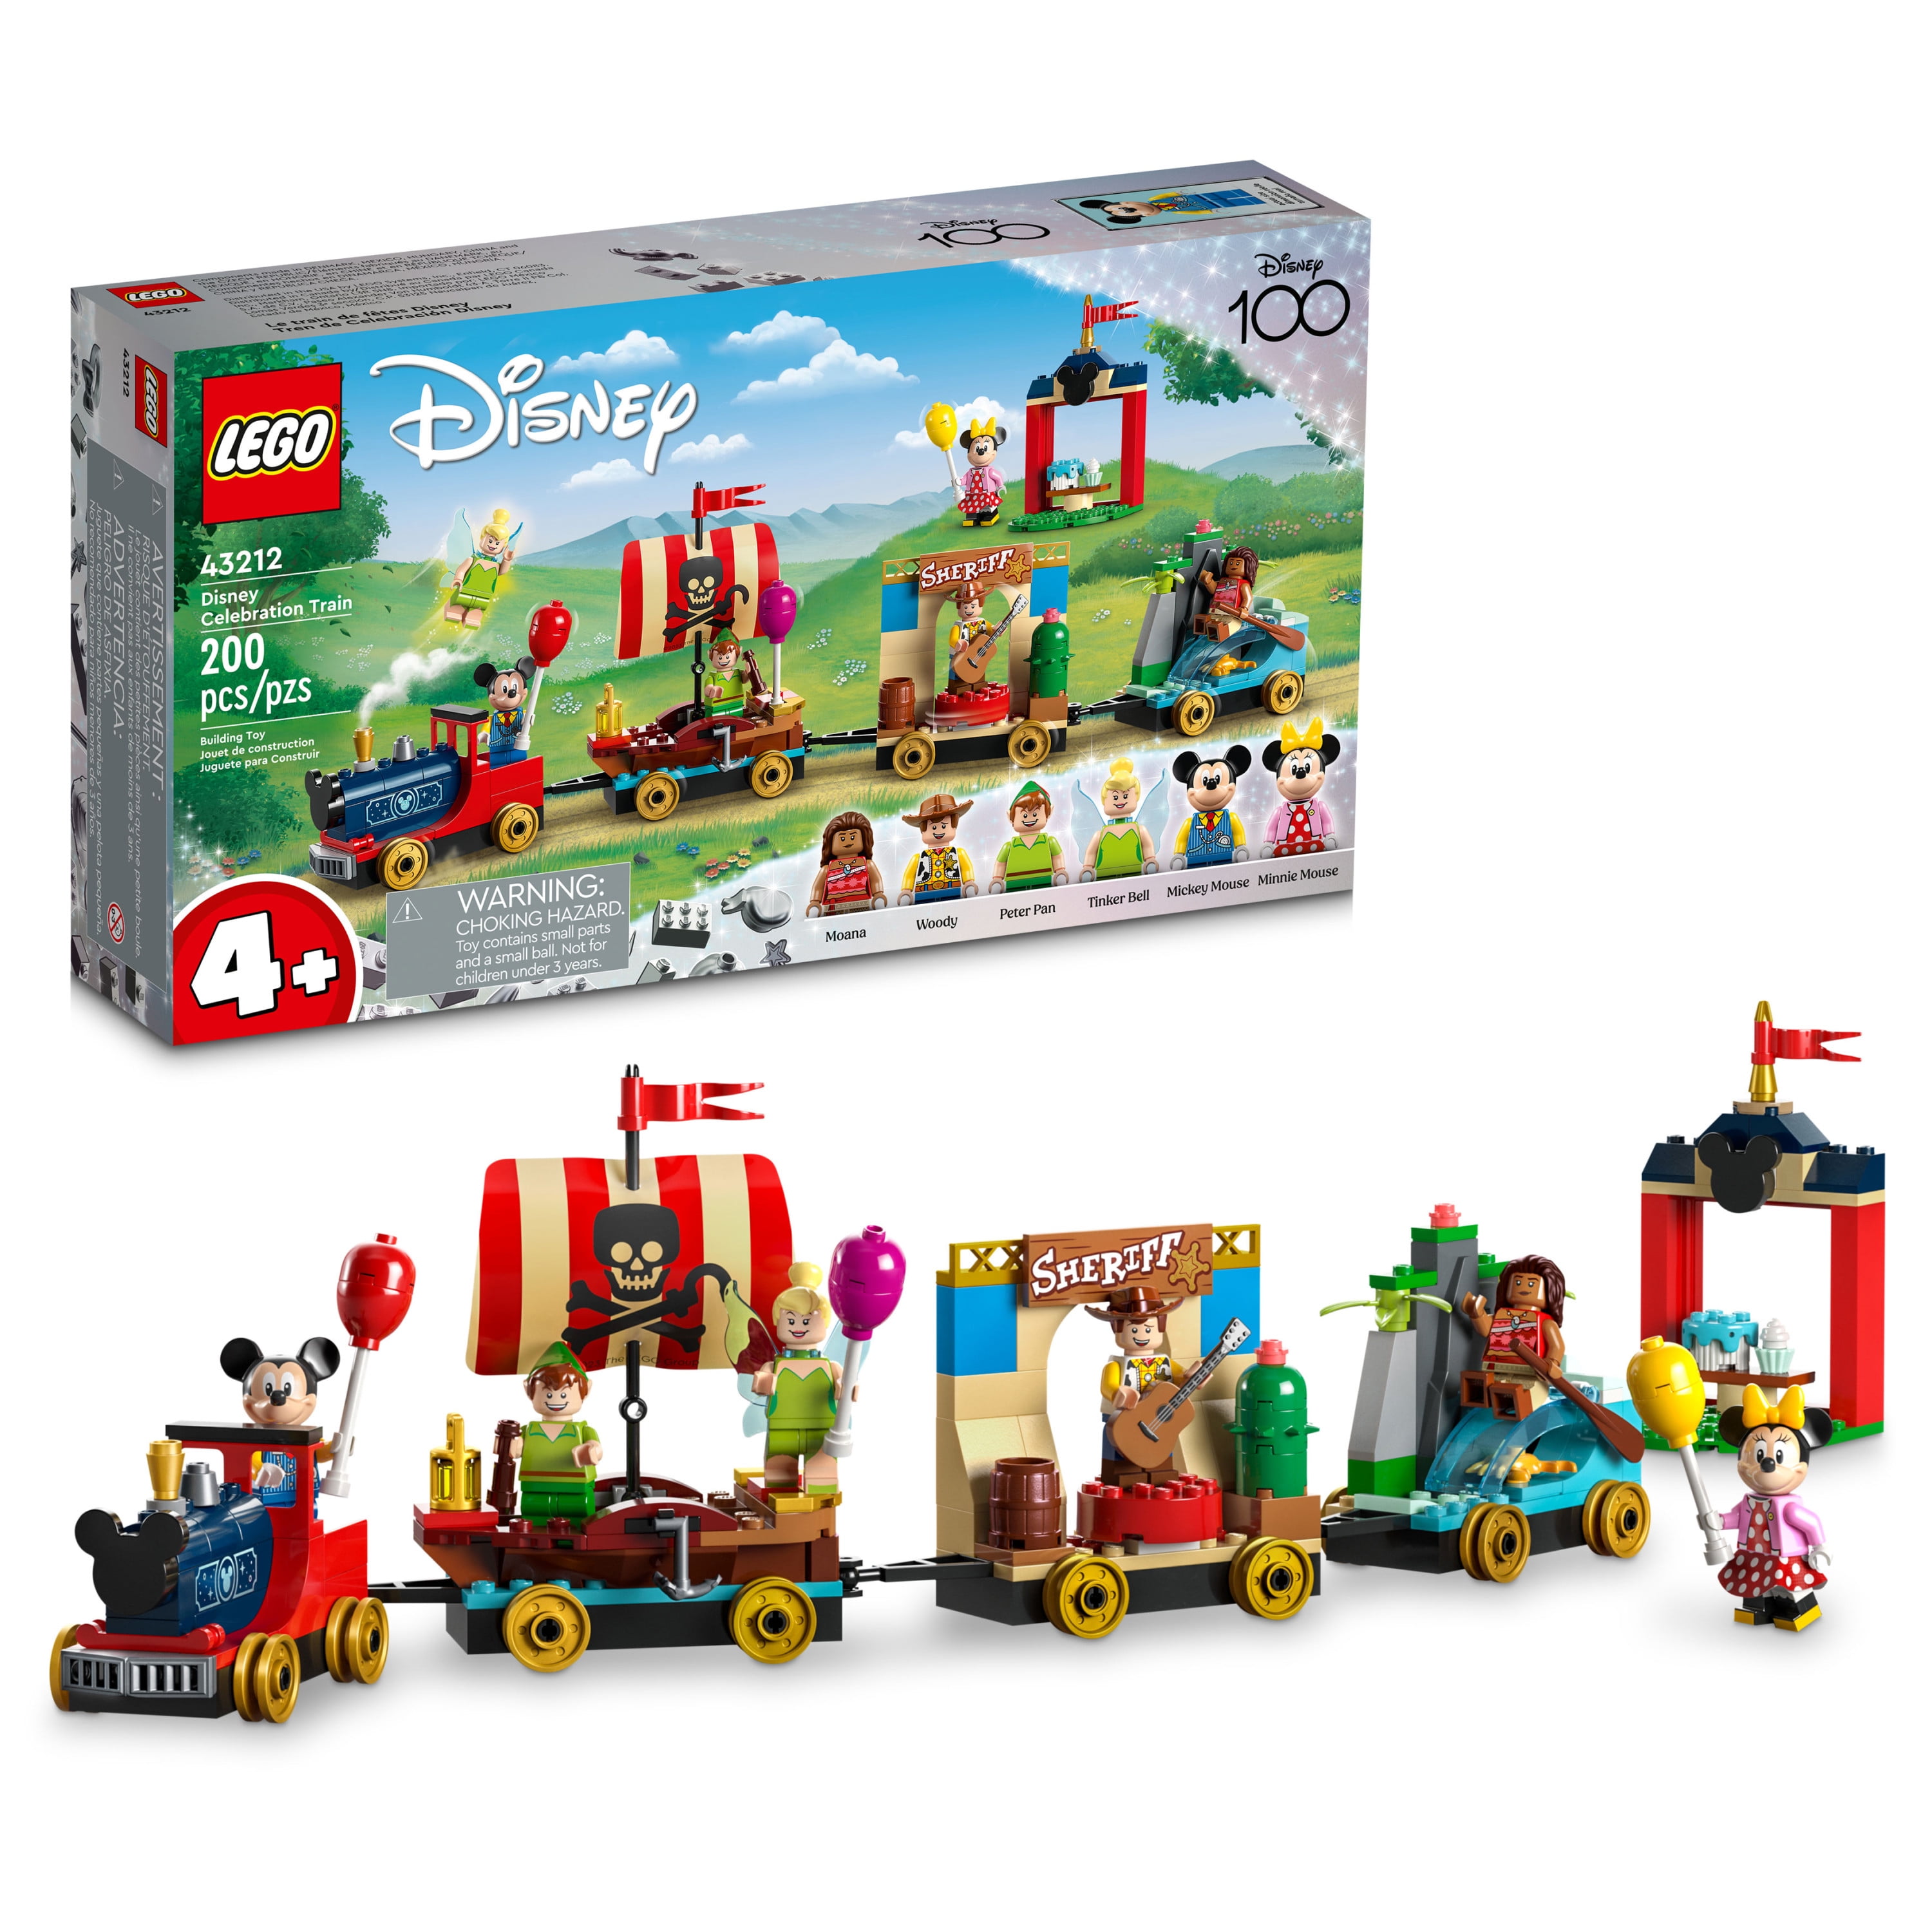 LEGO Disney 100 Celebration Train 43212 Building Toy, Imaginative Play, Fun  Birthday Gift for Preschool Kids Ages 4+, 6 Disney Minifigures: Moana